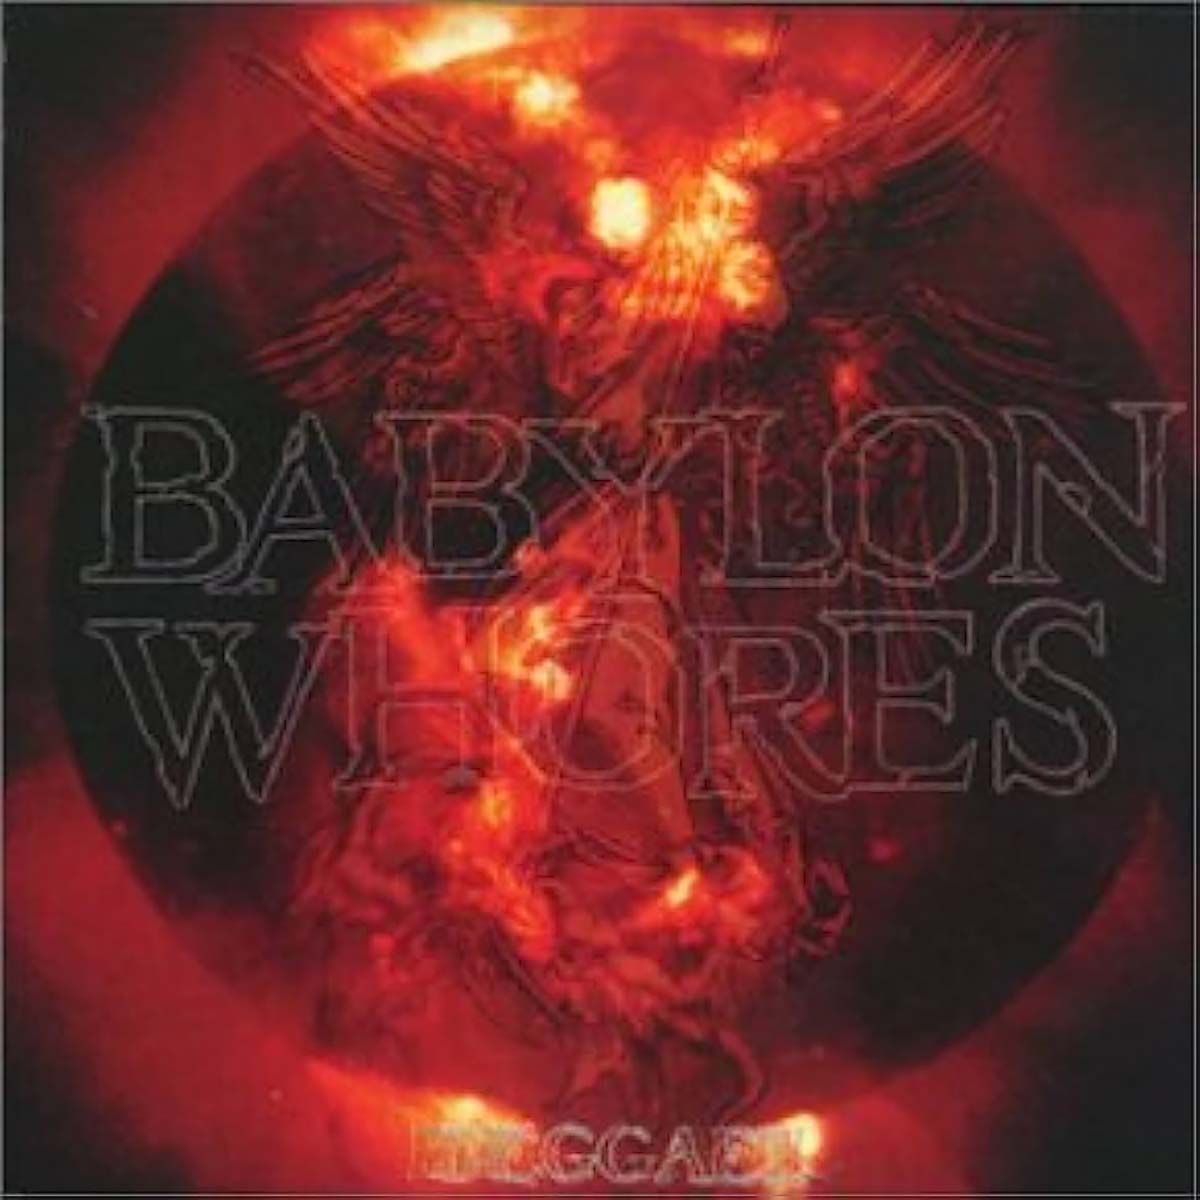 Babylon Whores - Deggael